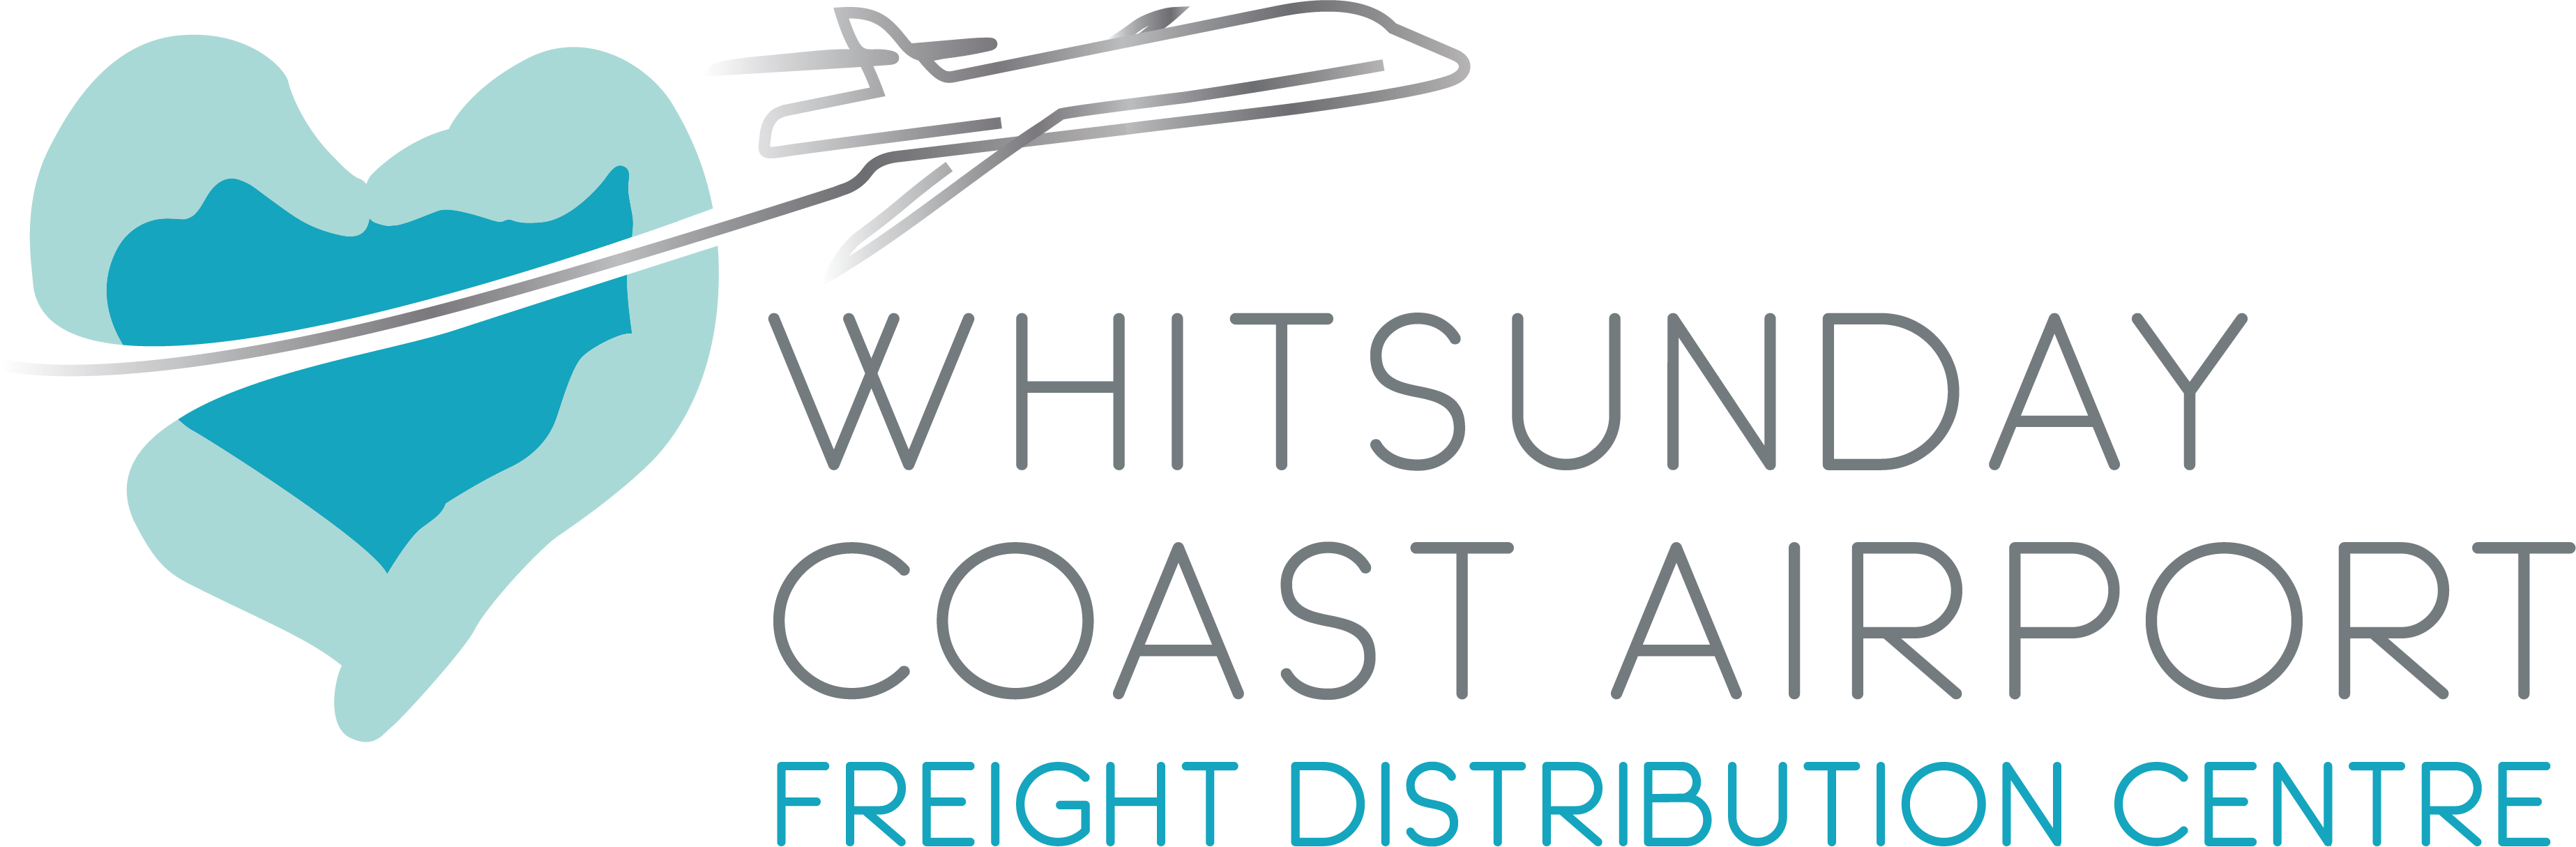 Freight distribution centre logo